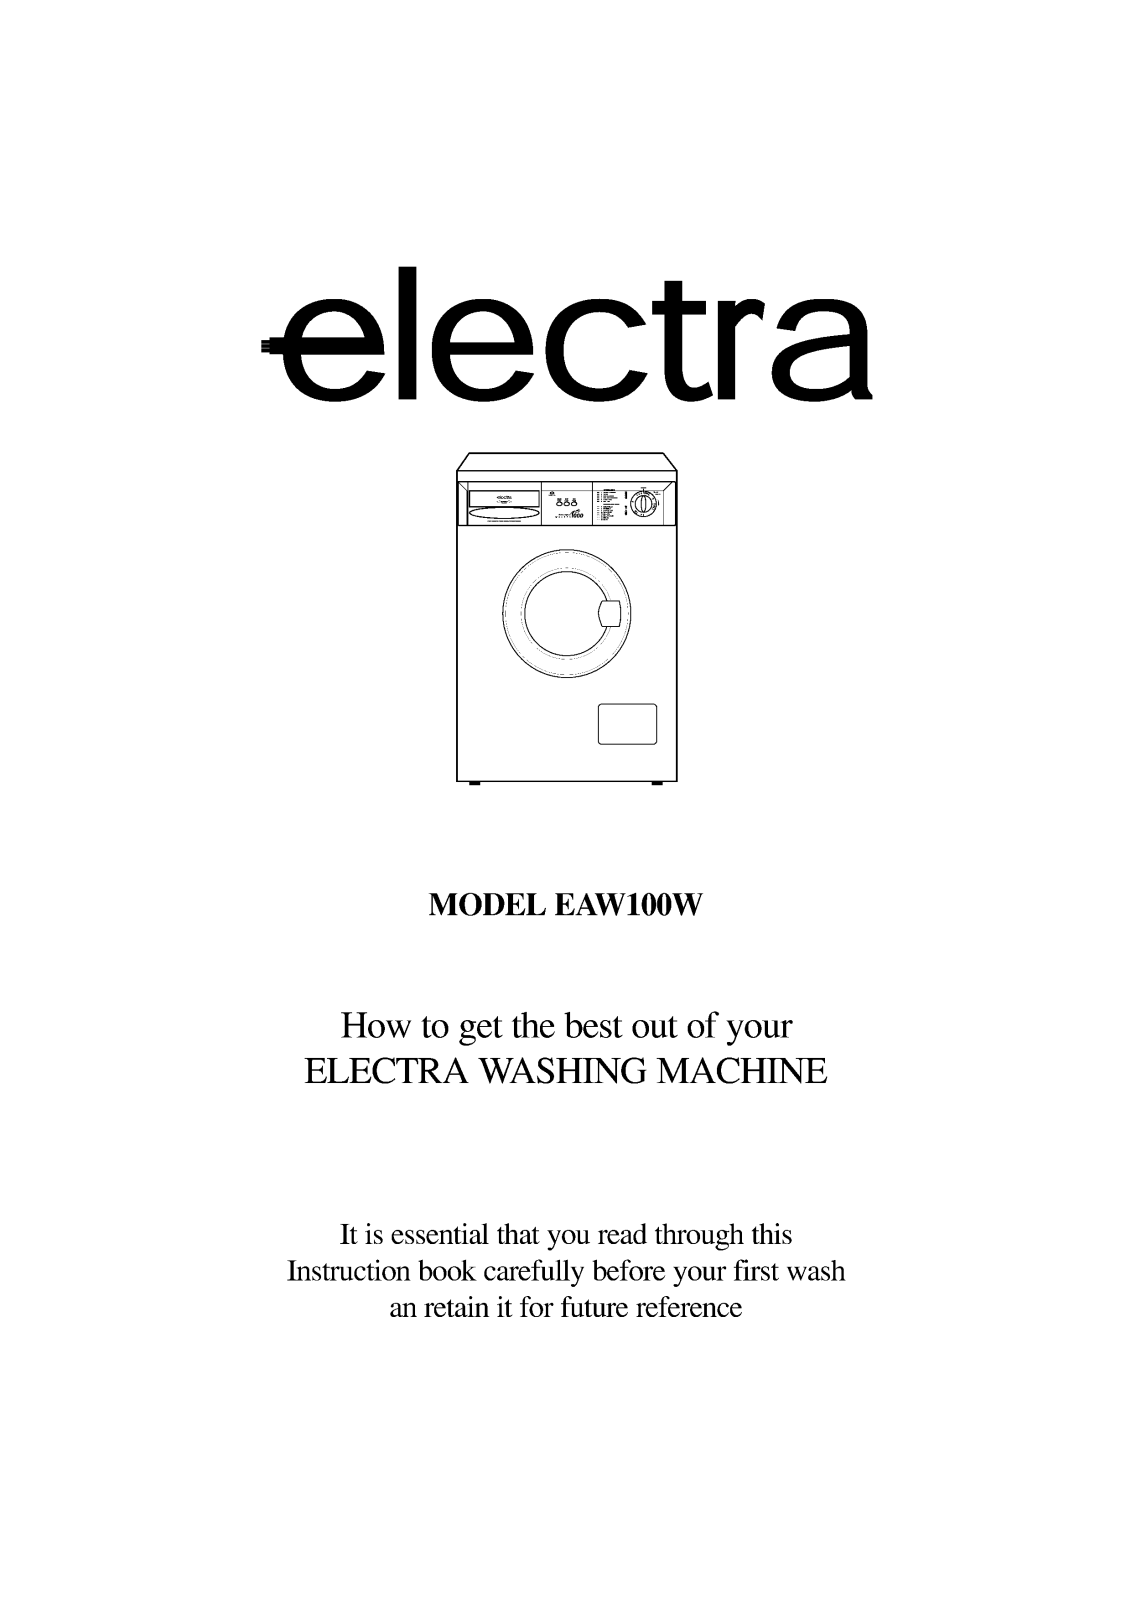 Electrolux electra EAW100W User Manual